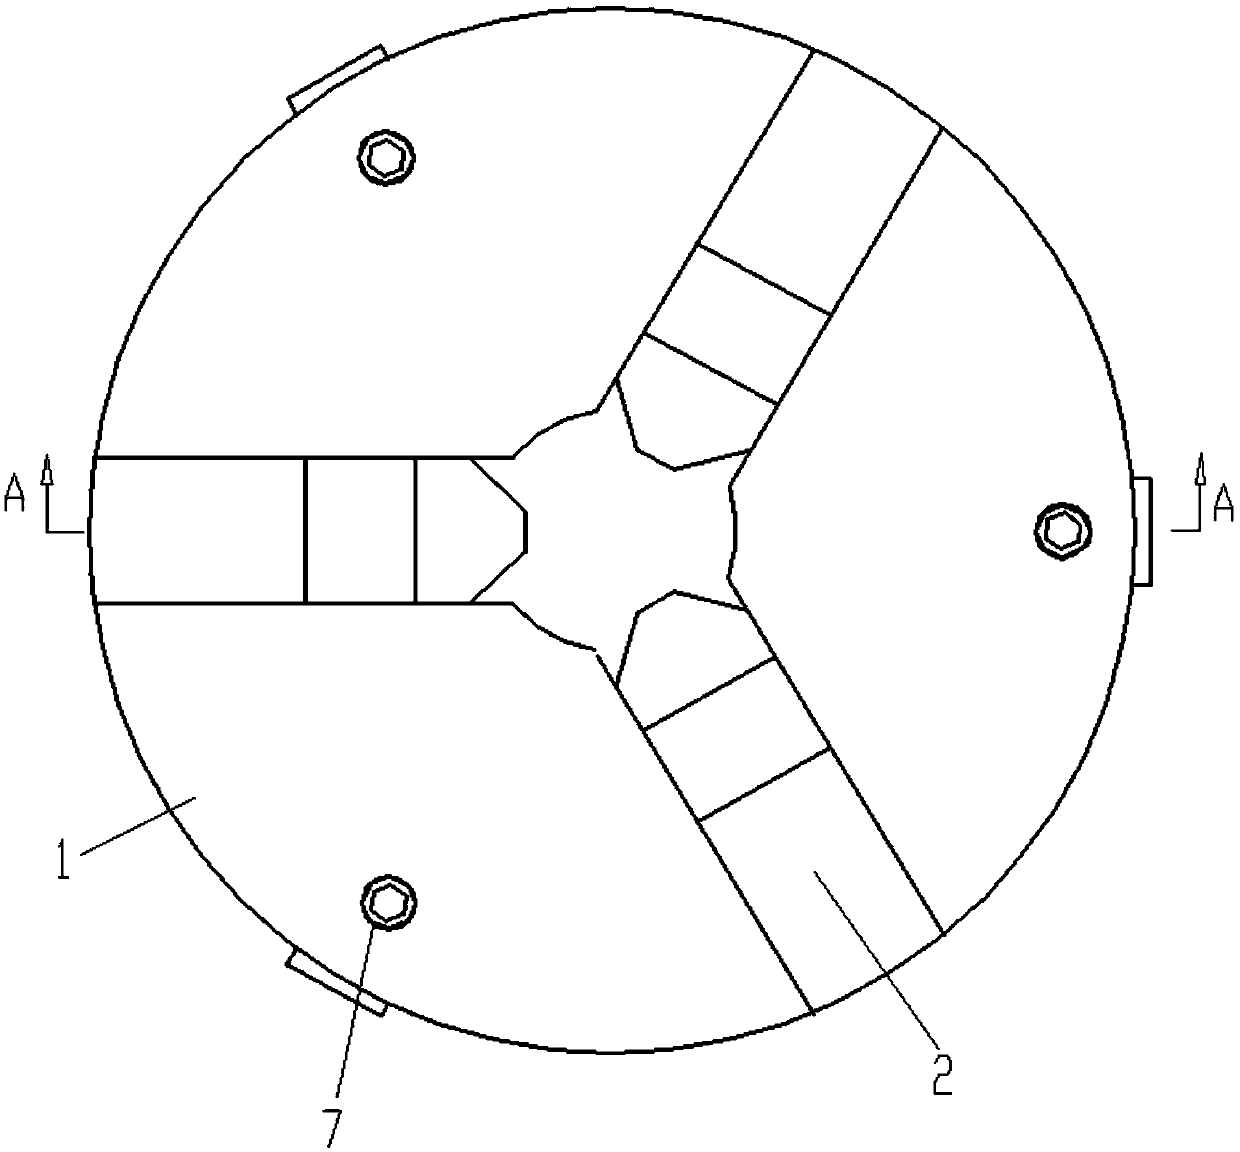 Manual three-jaw chuck with three-jaw micro-movement locking devices